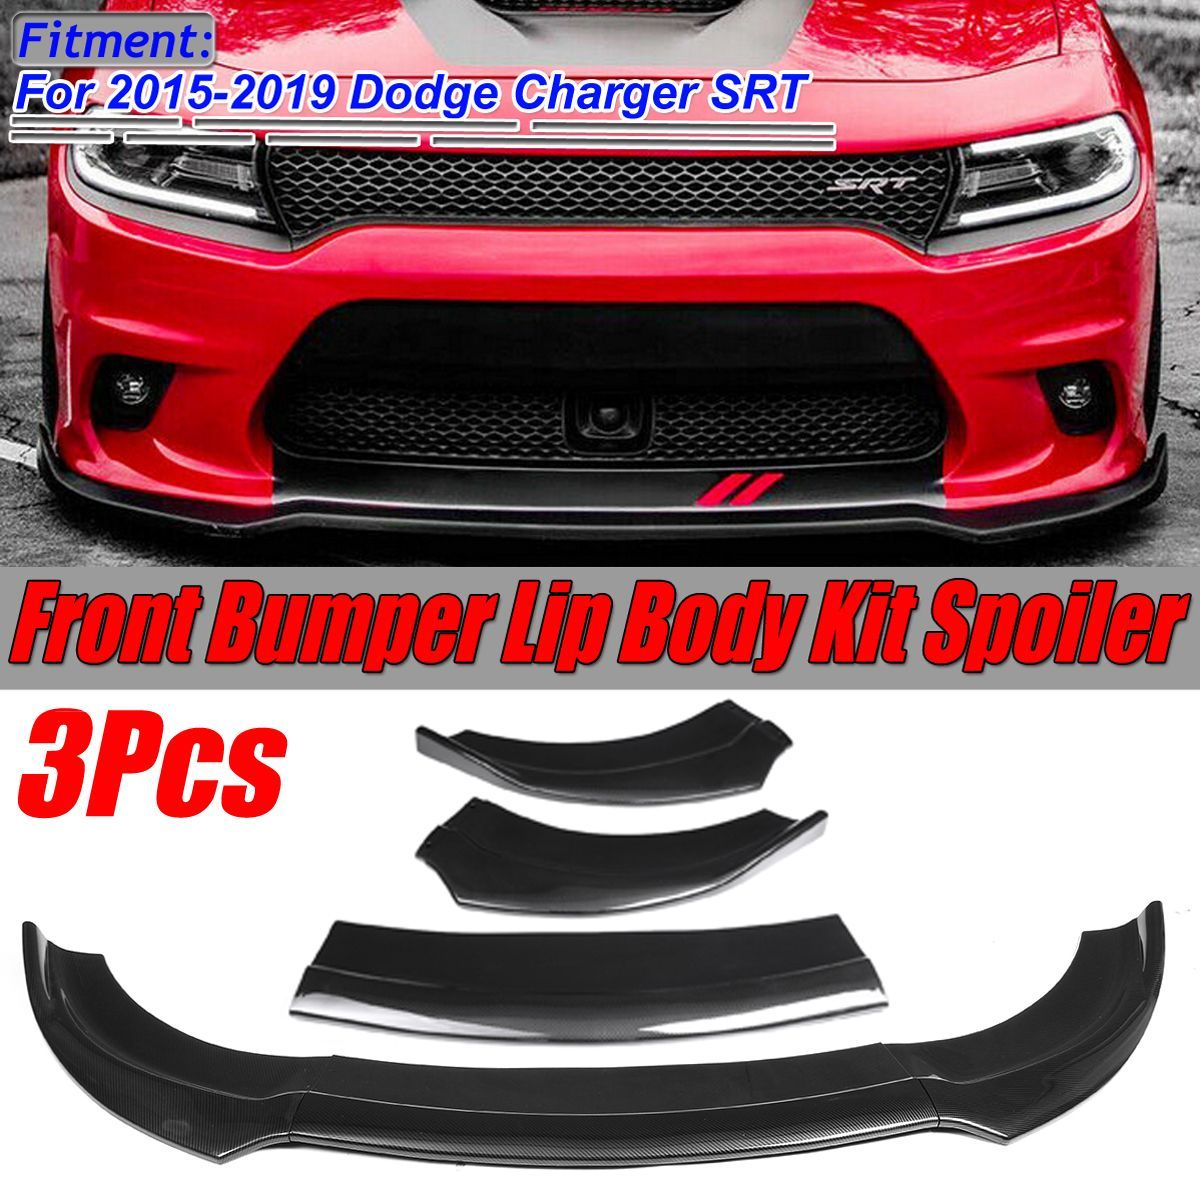 Carbon-Fiber-Style-Front-Bumper-Protector-Chin-Splitter-For-Dodge-Charger-SRT-15-19-1588099